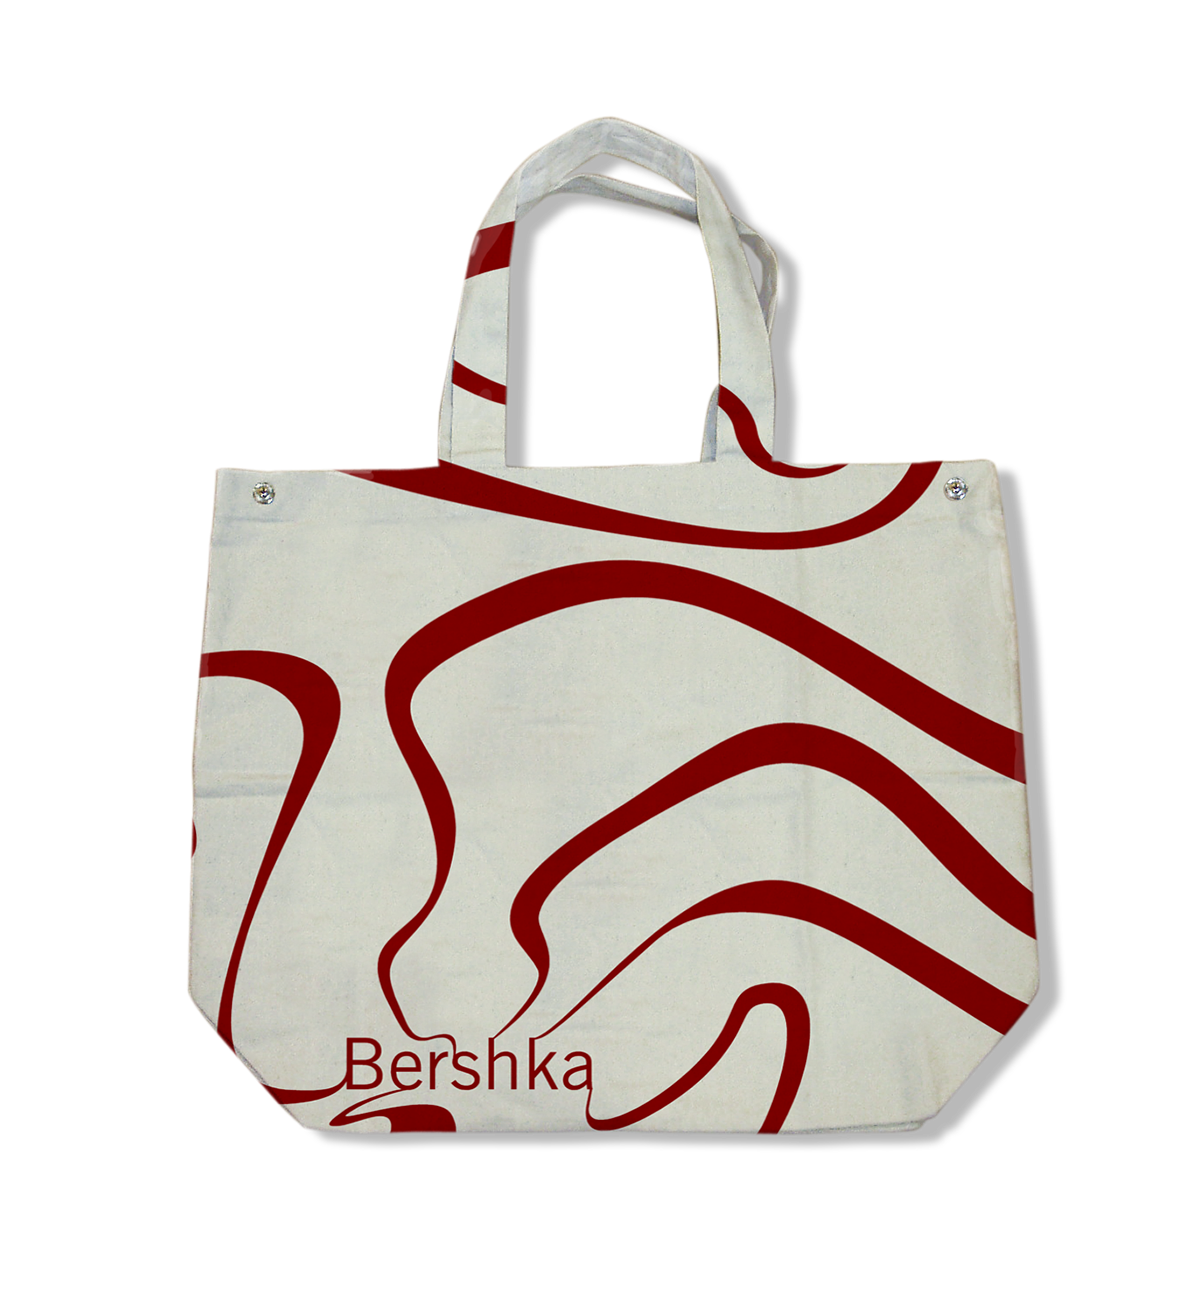 Coca-Cola Bershka shopping bag